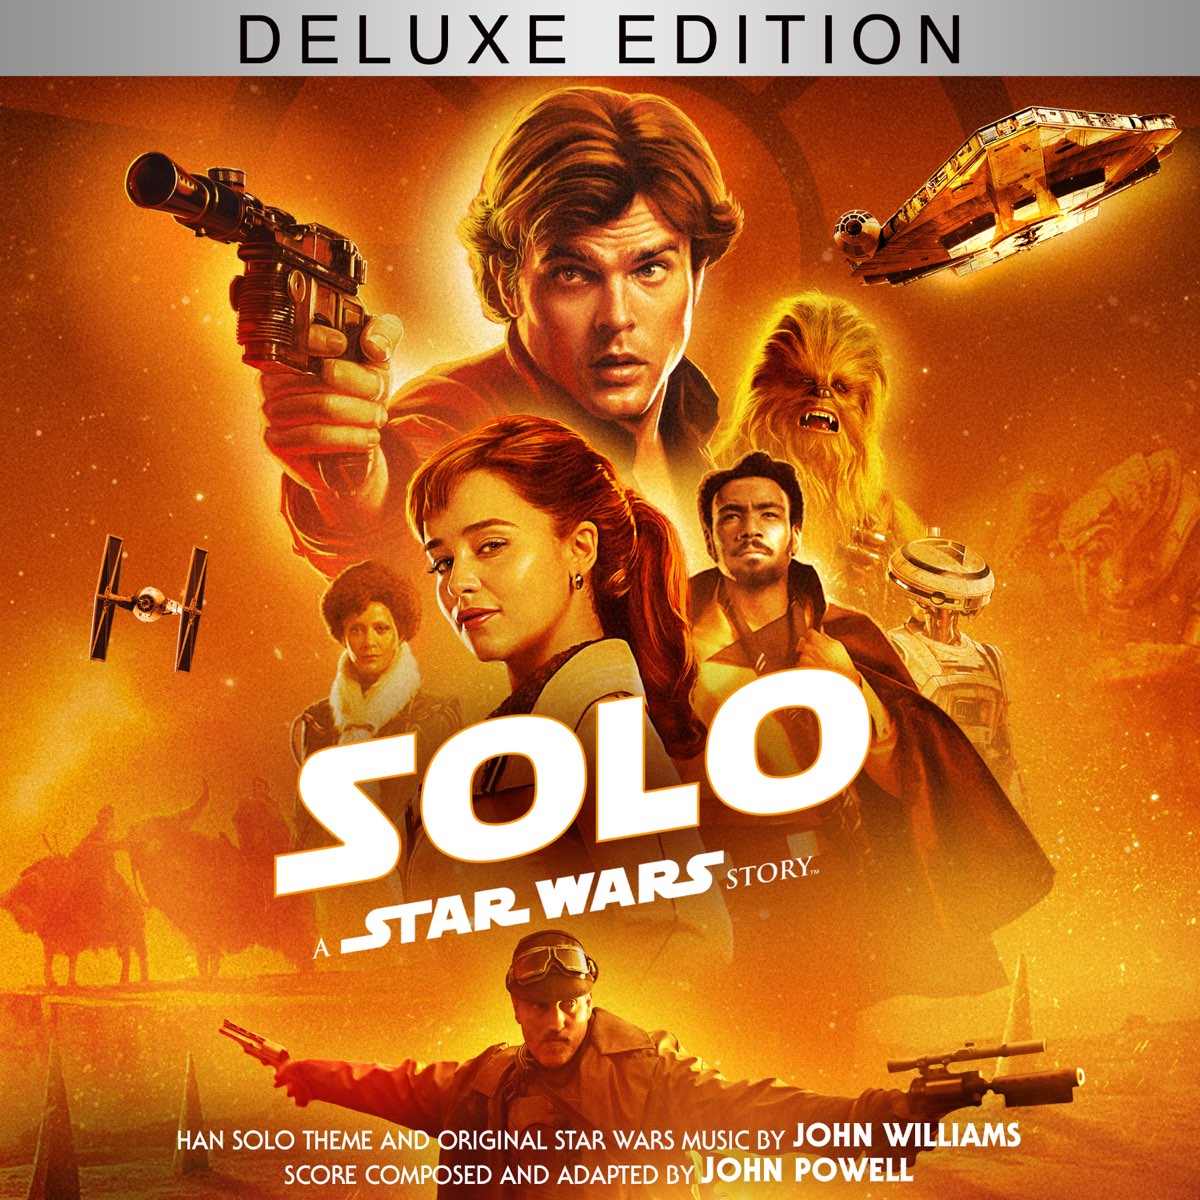 Star Wars Vinyl Box Set John Williams Original Soundtrack Limited Edition F3